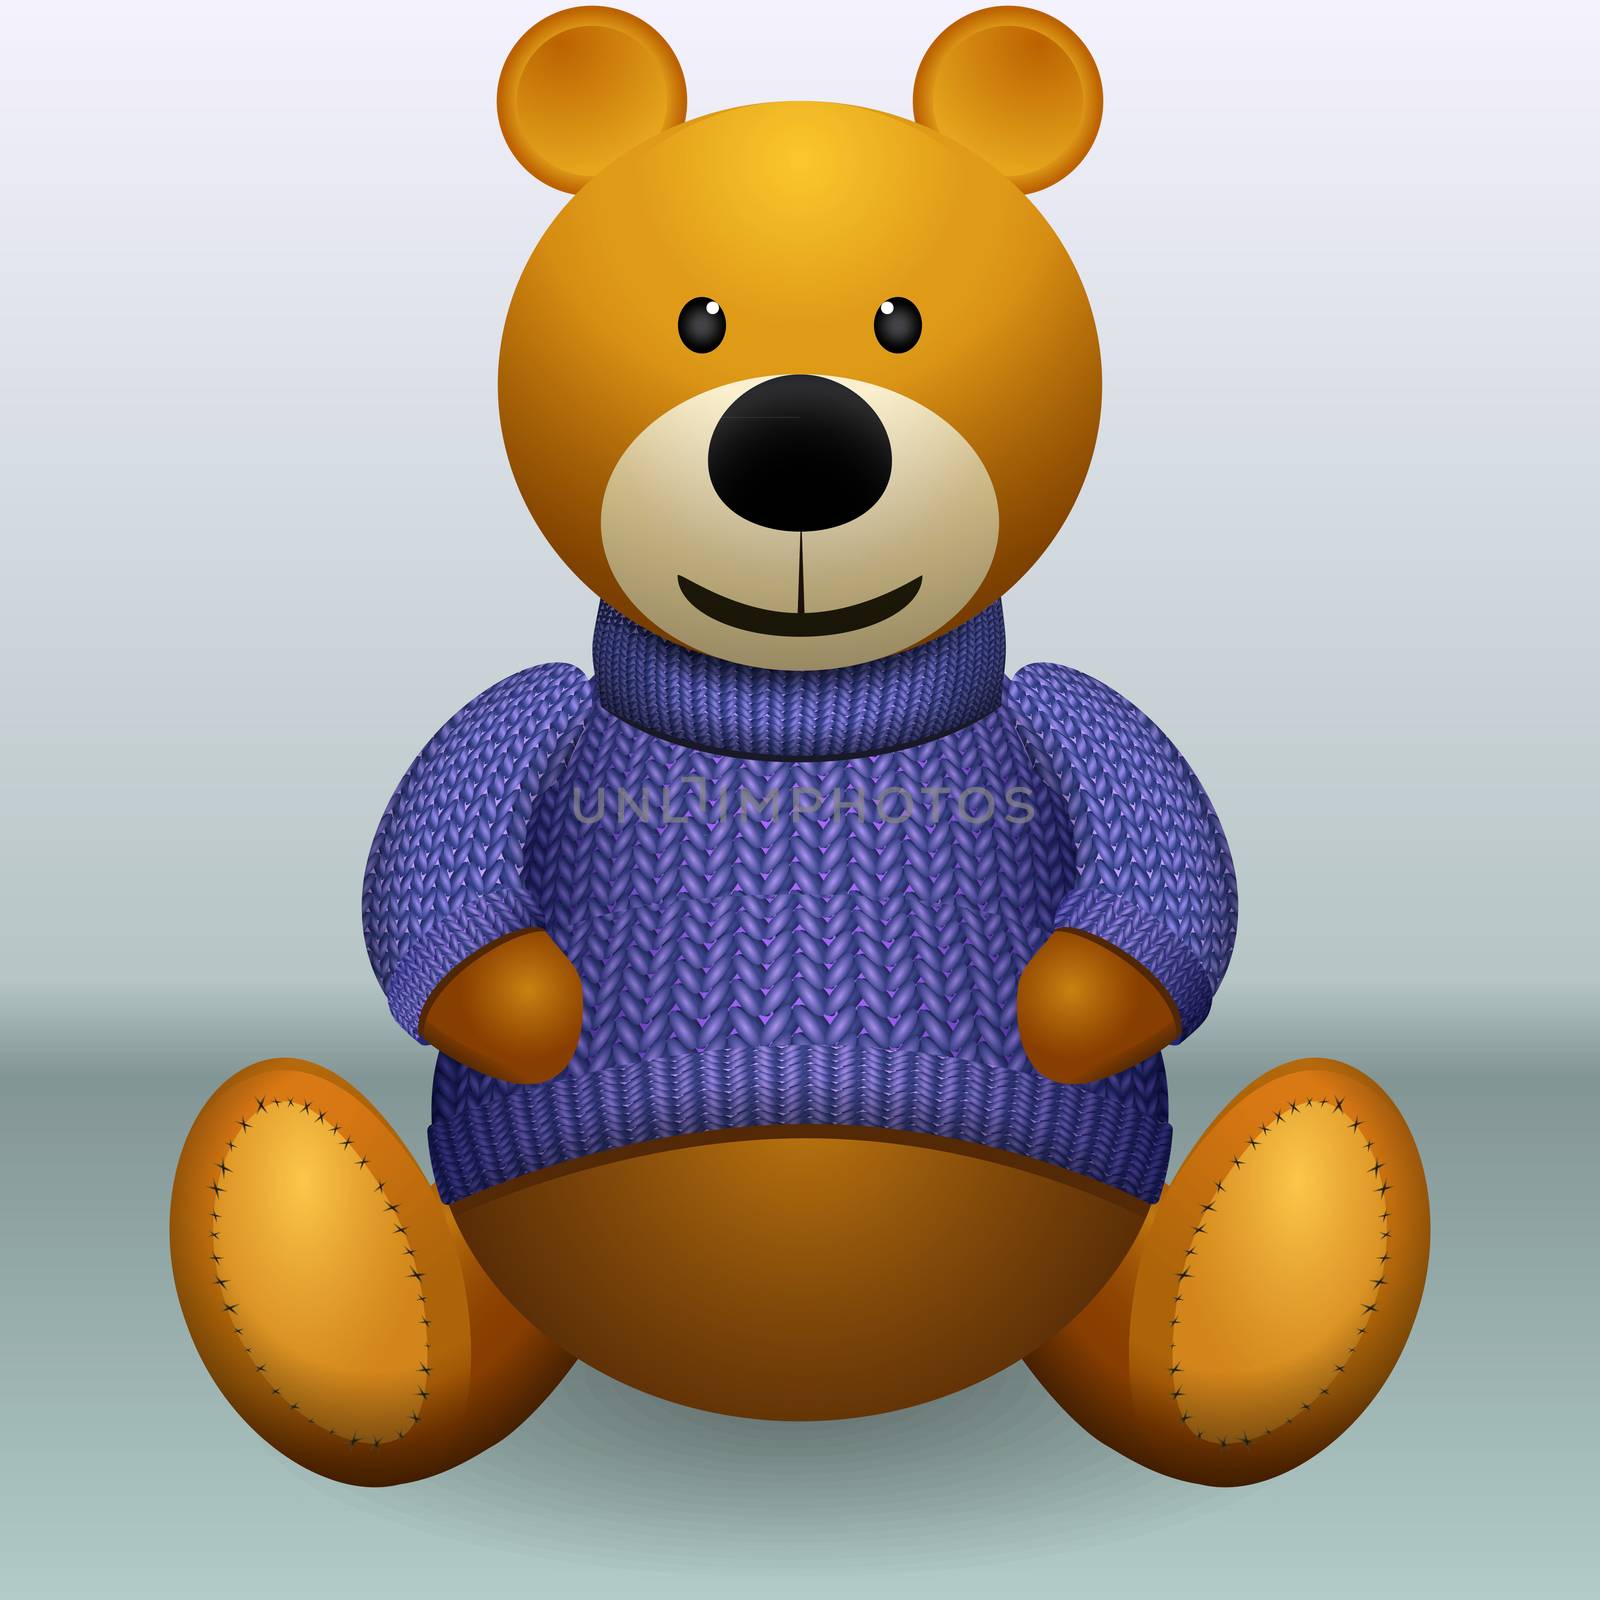 Teddy bear in sweater grey ackground.